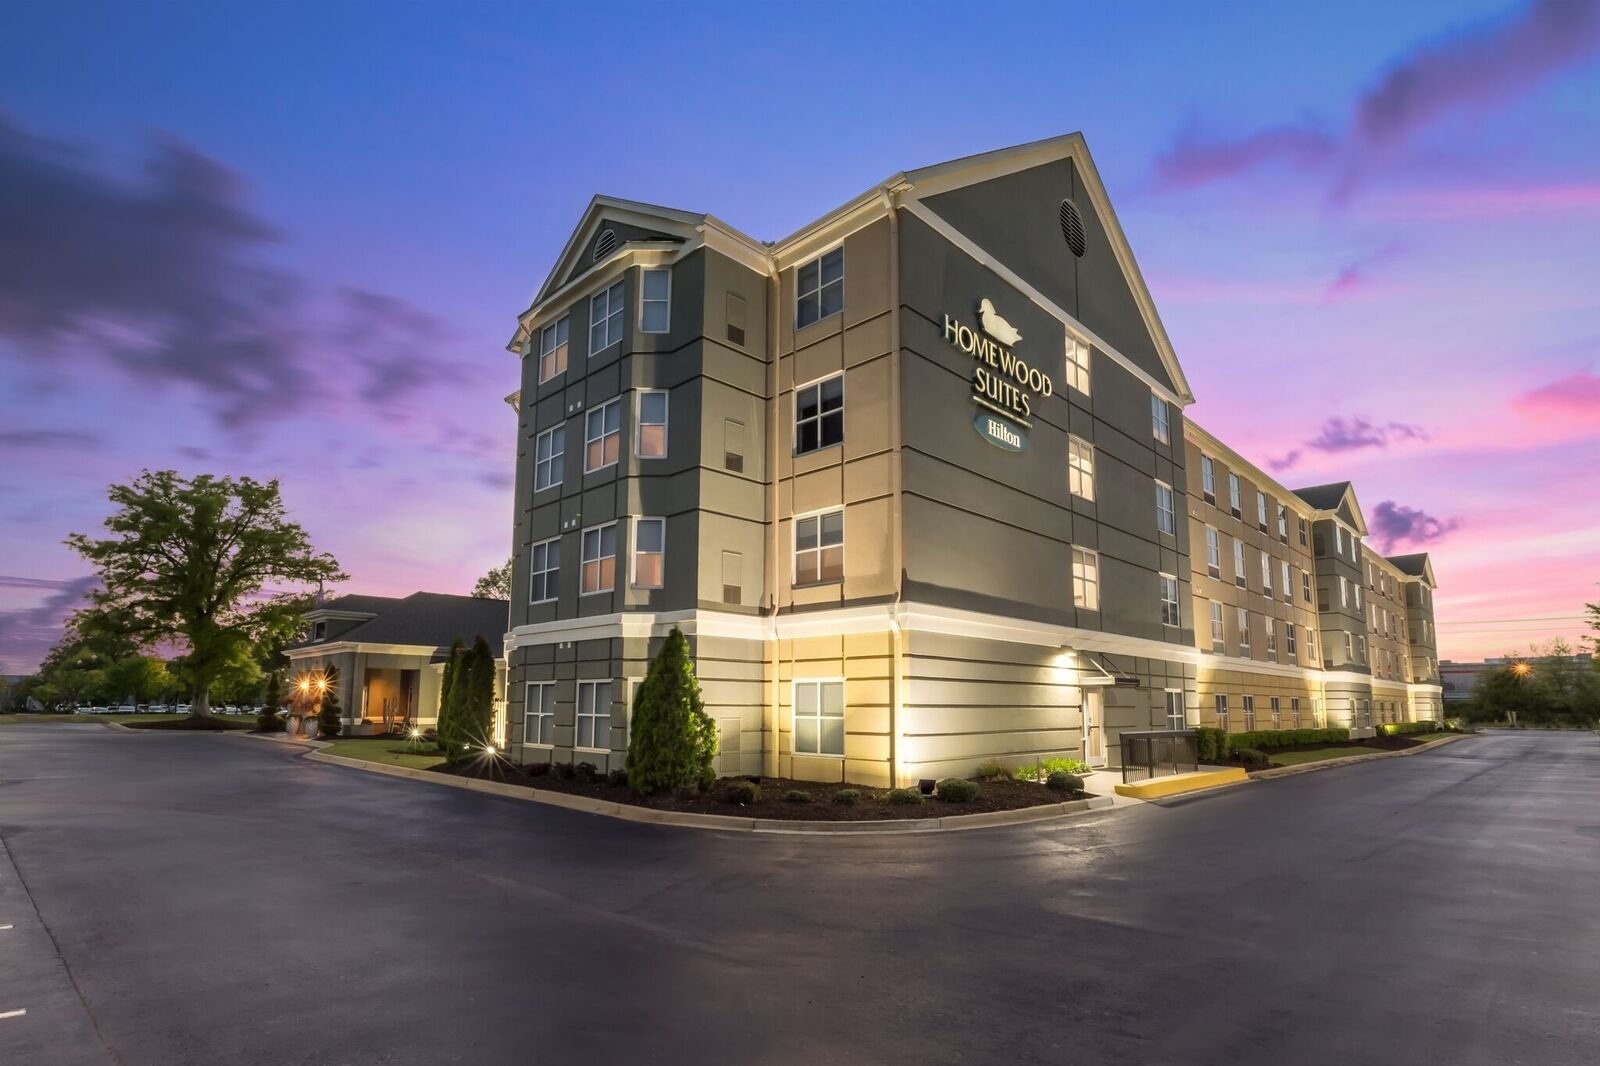 Photo of Homewood Suites Hilton Greenville, Greenville, SC